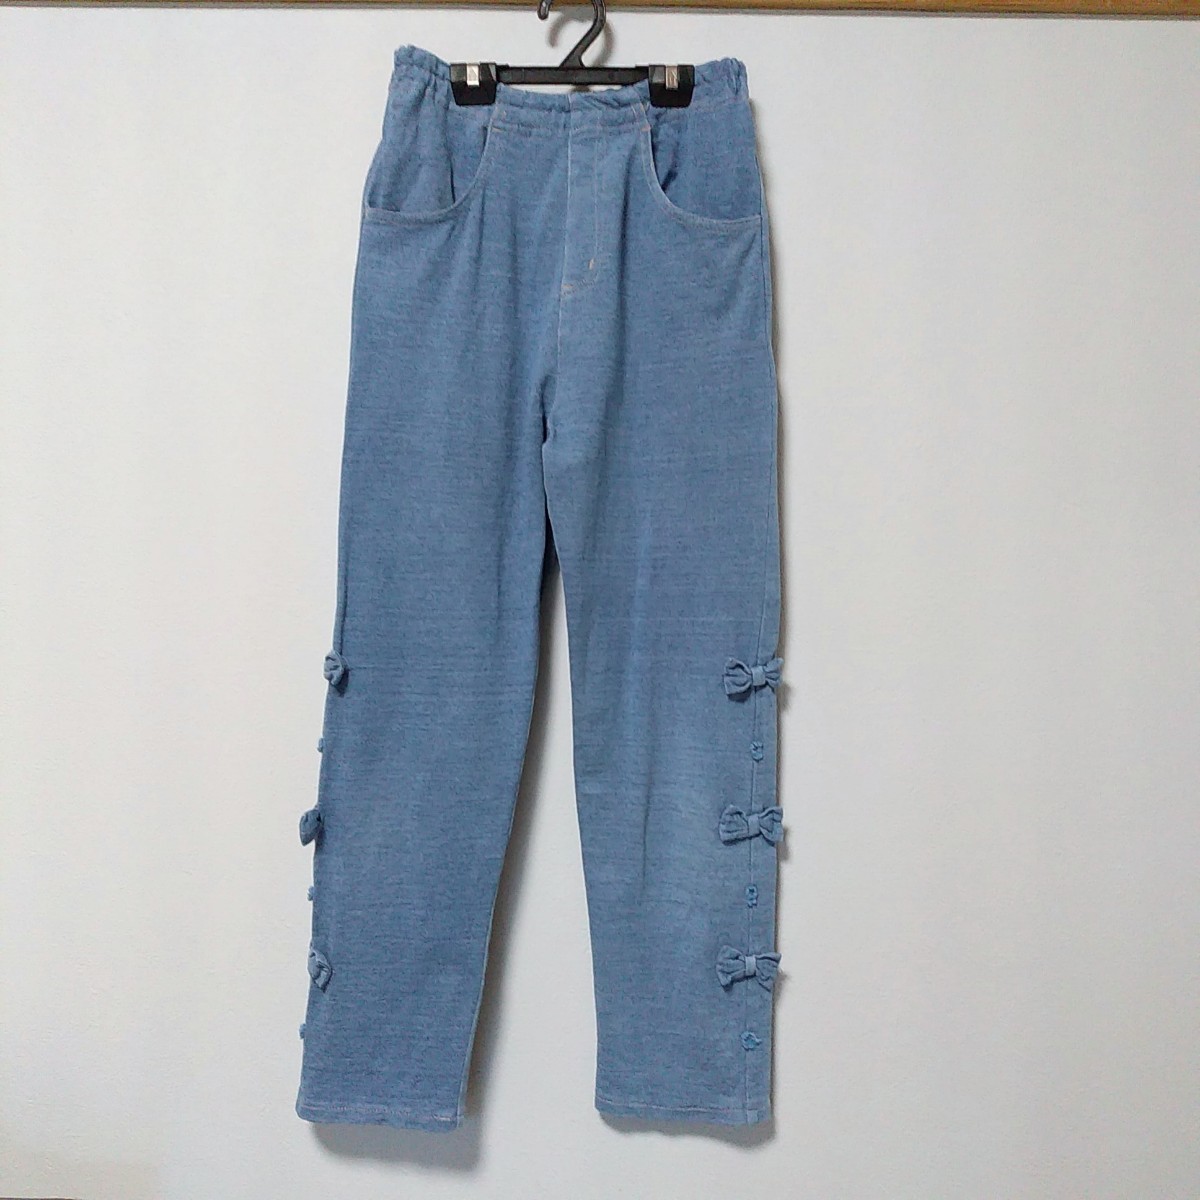 souris(スーリー)裾 リボン パンツ 140 カタログ掲載品 水色_画像1